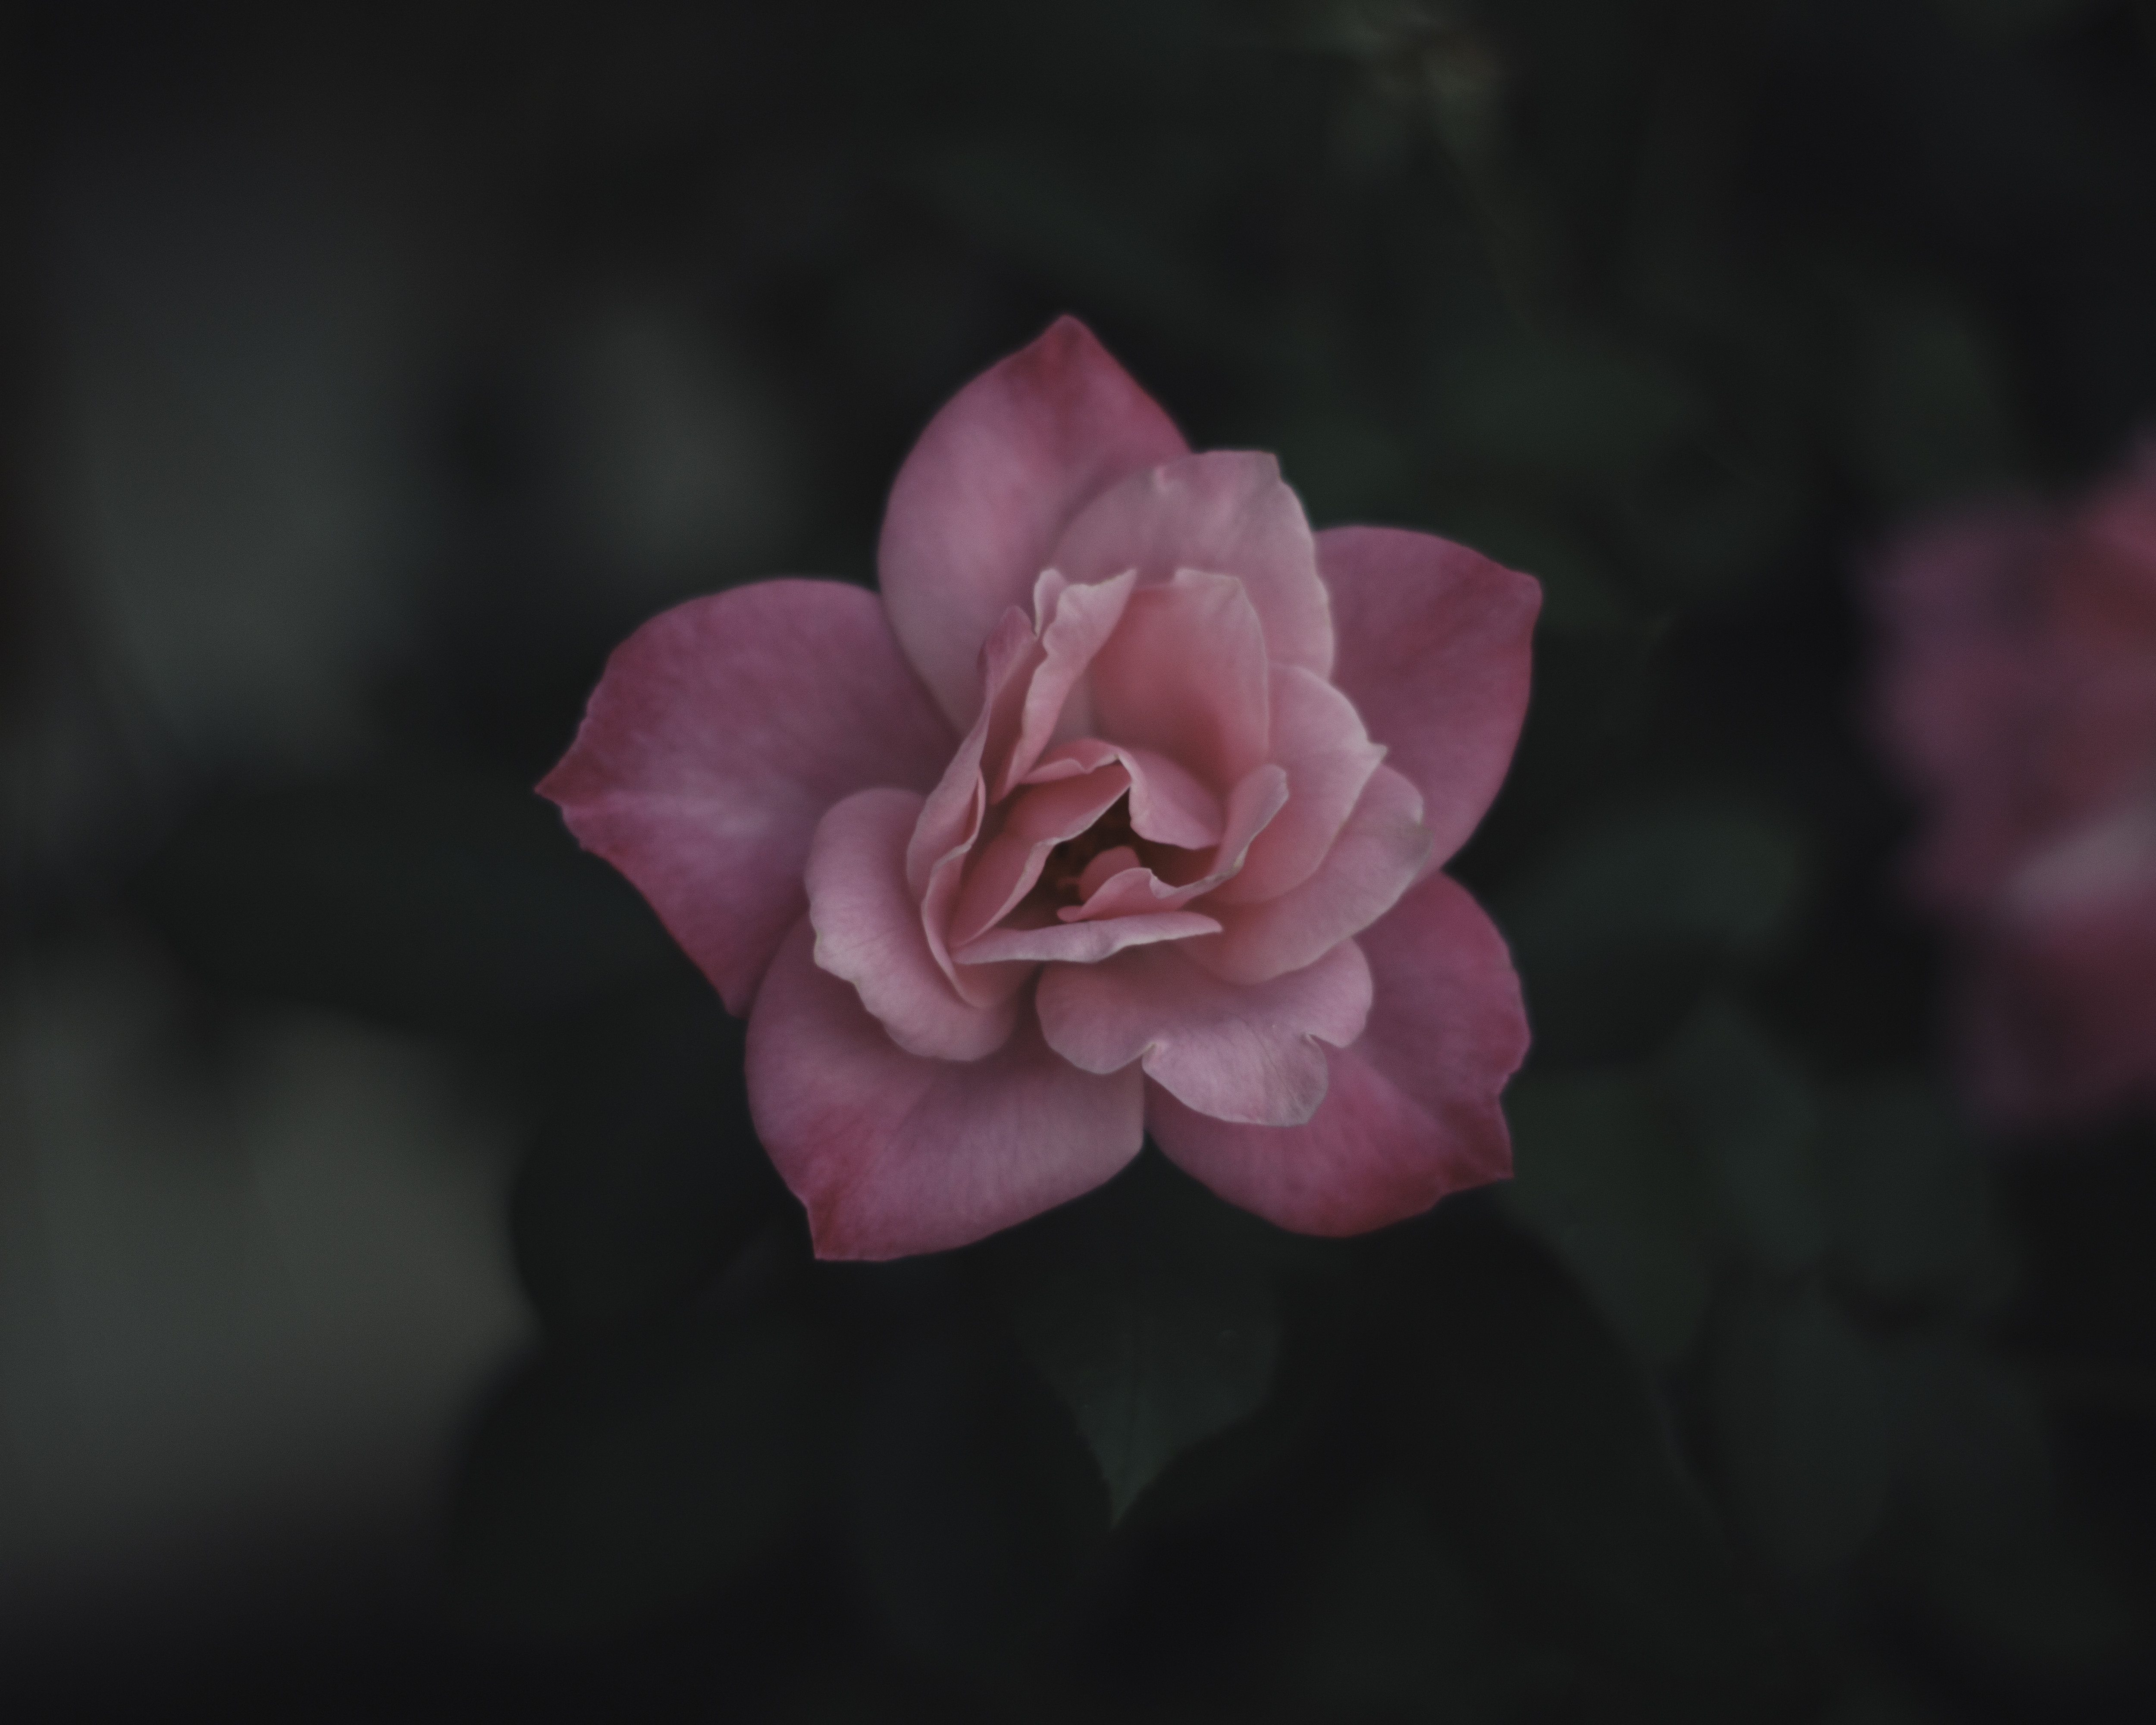 File:Pink flower (1).jpg - Wikimedia Commons